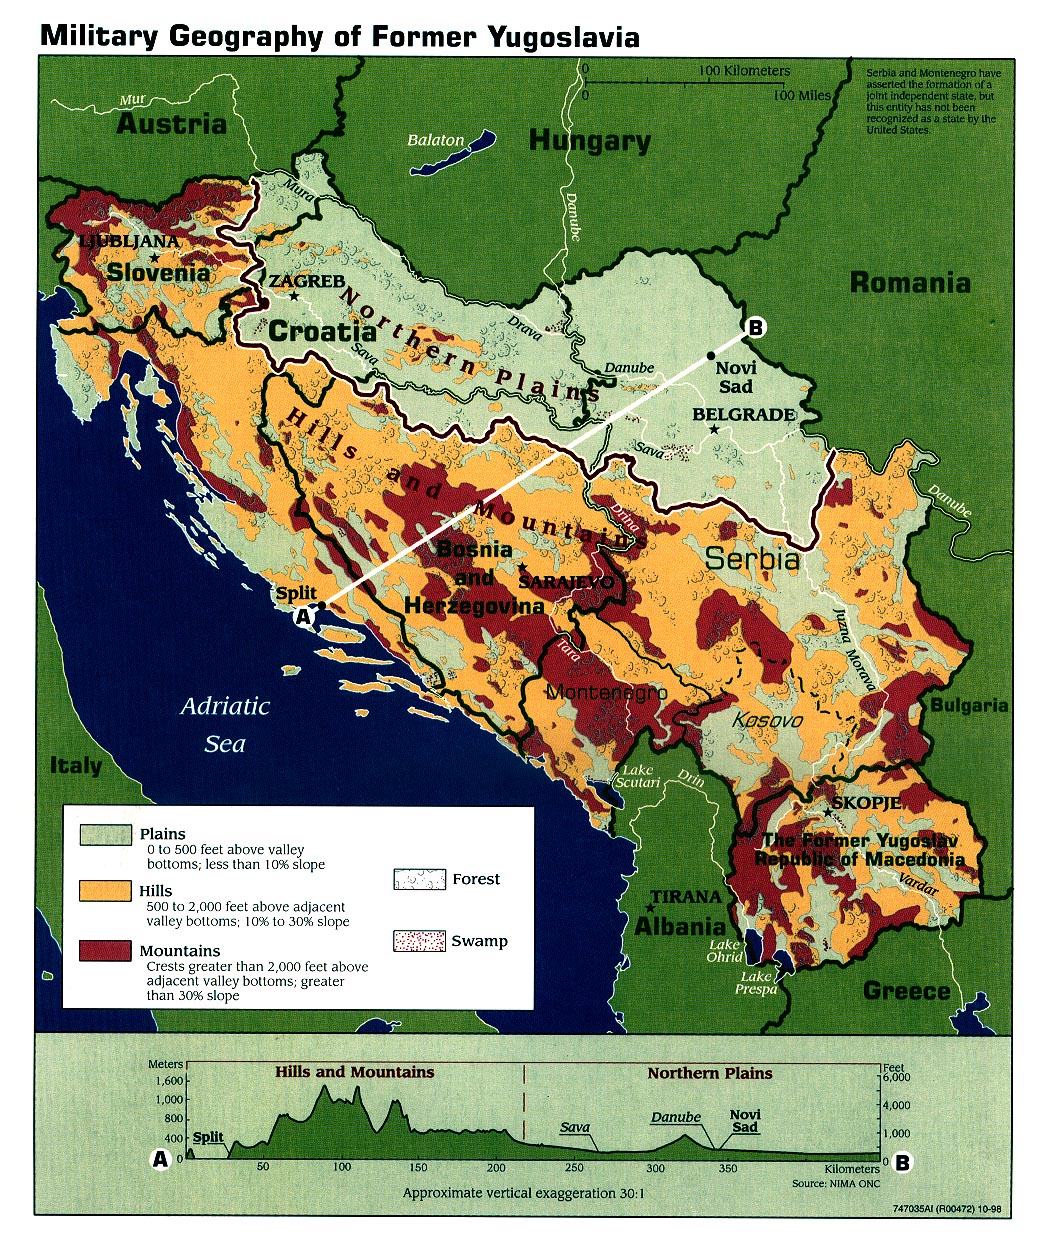 Orchard tube Got ready Reisenett: Serbia and Montenegro (Yugoslavia) Maps